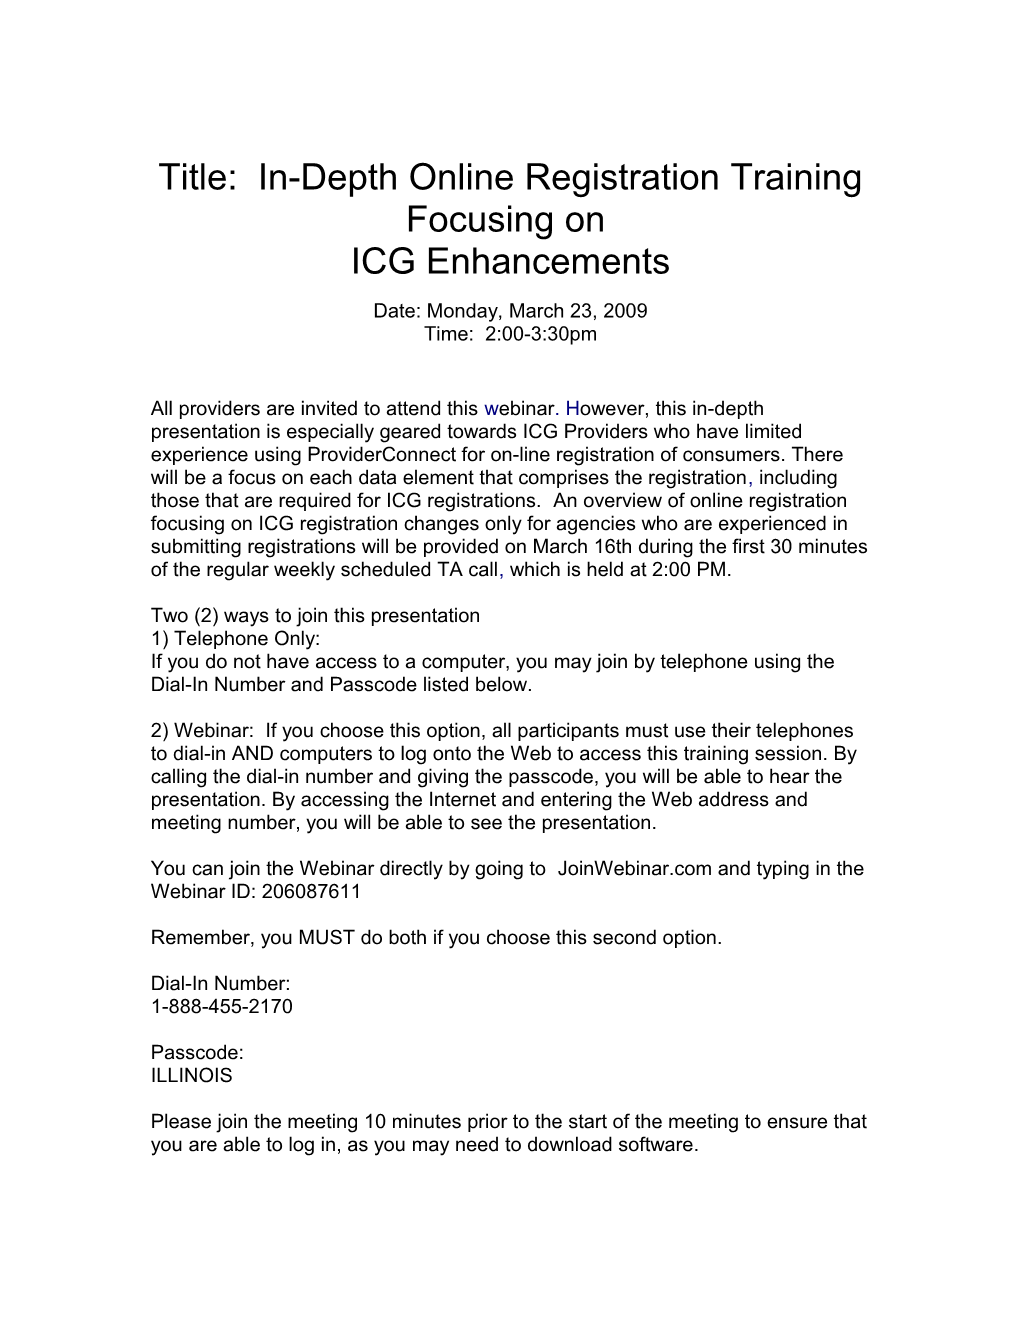 Title: In-Depth Online Registration Training Focusing On